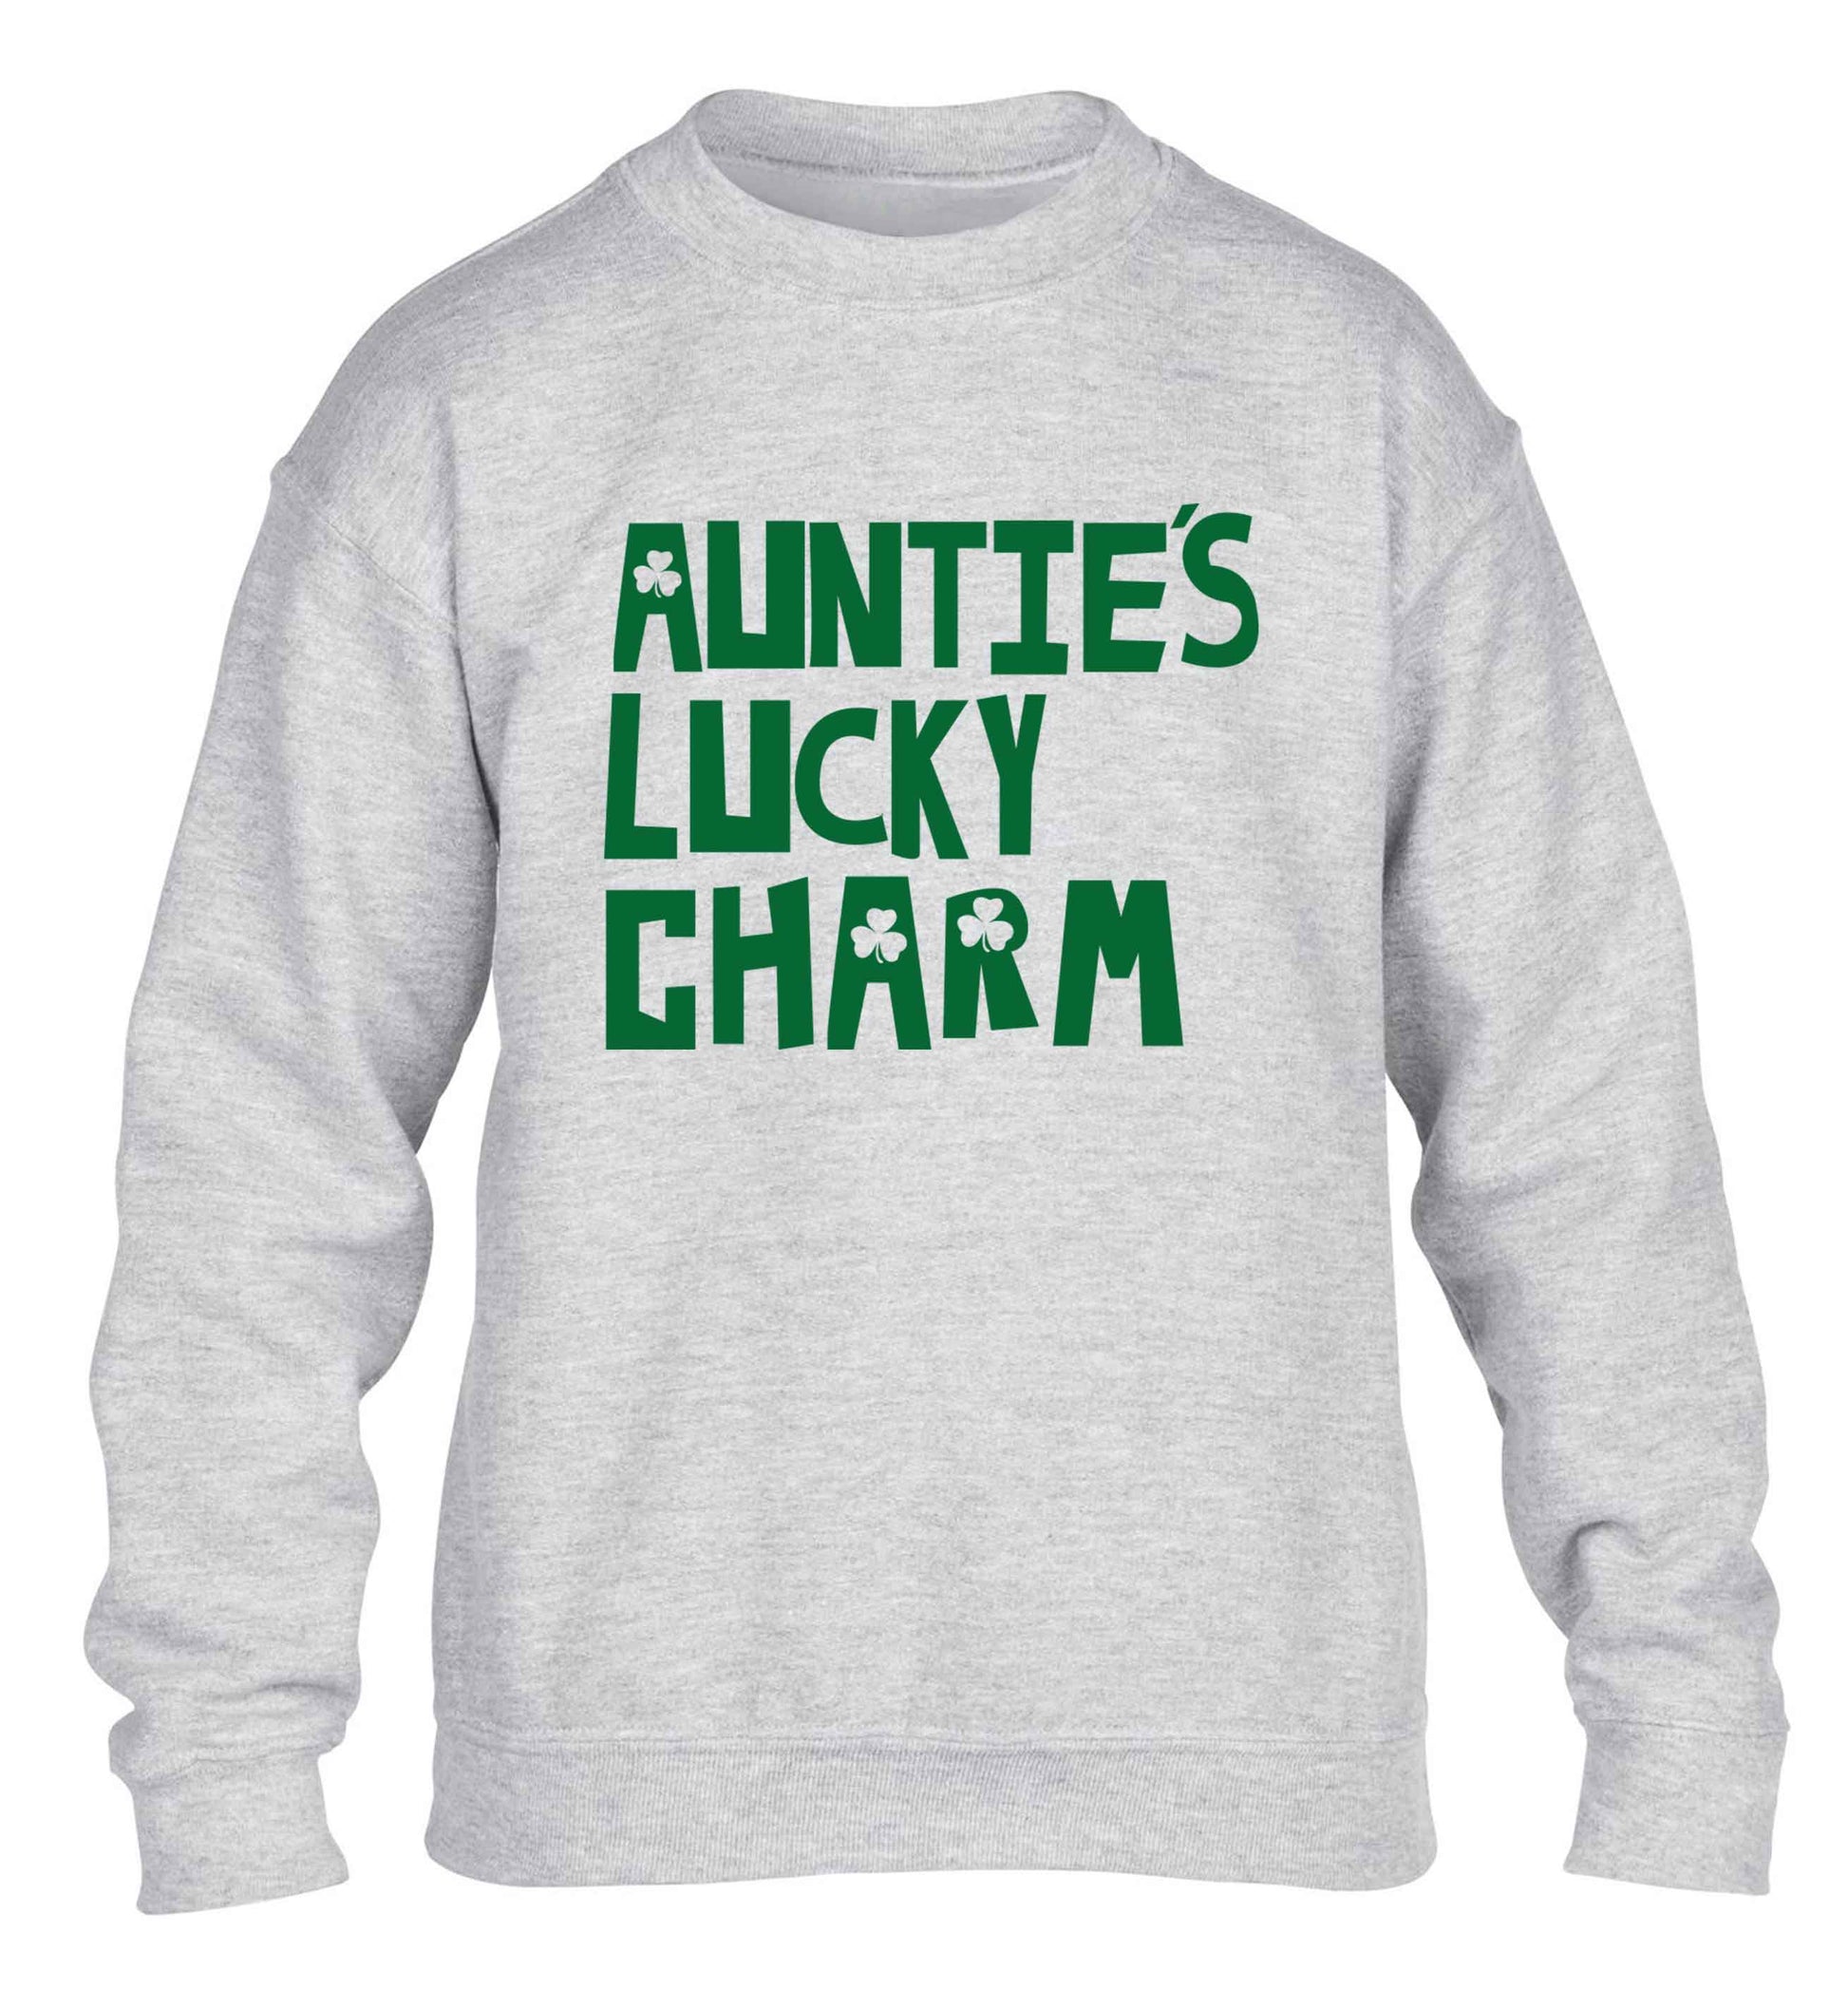 Auntie's lucky charm children's grey sweater 12-13 Years